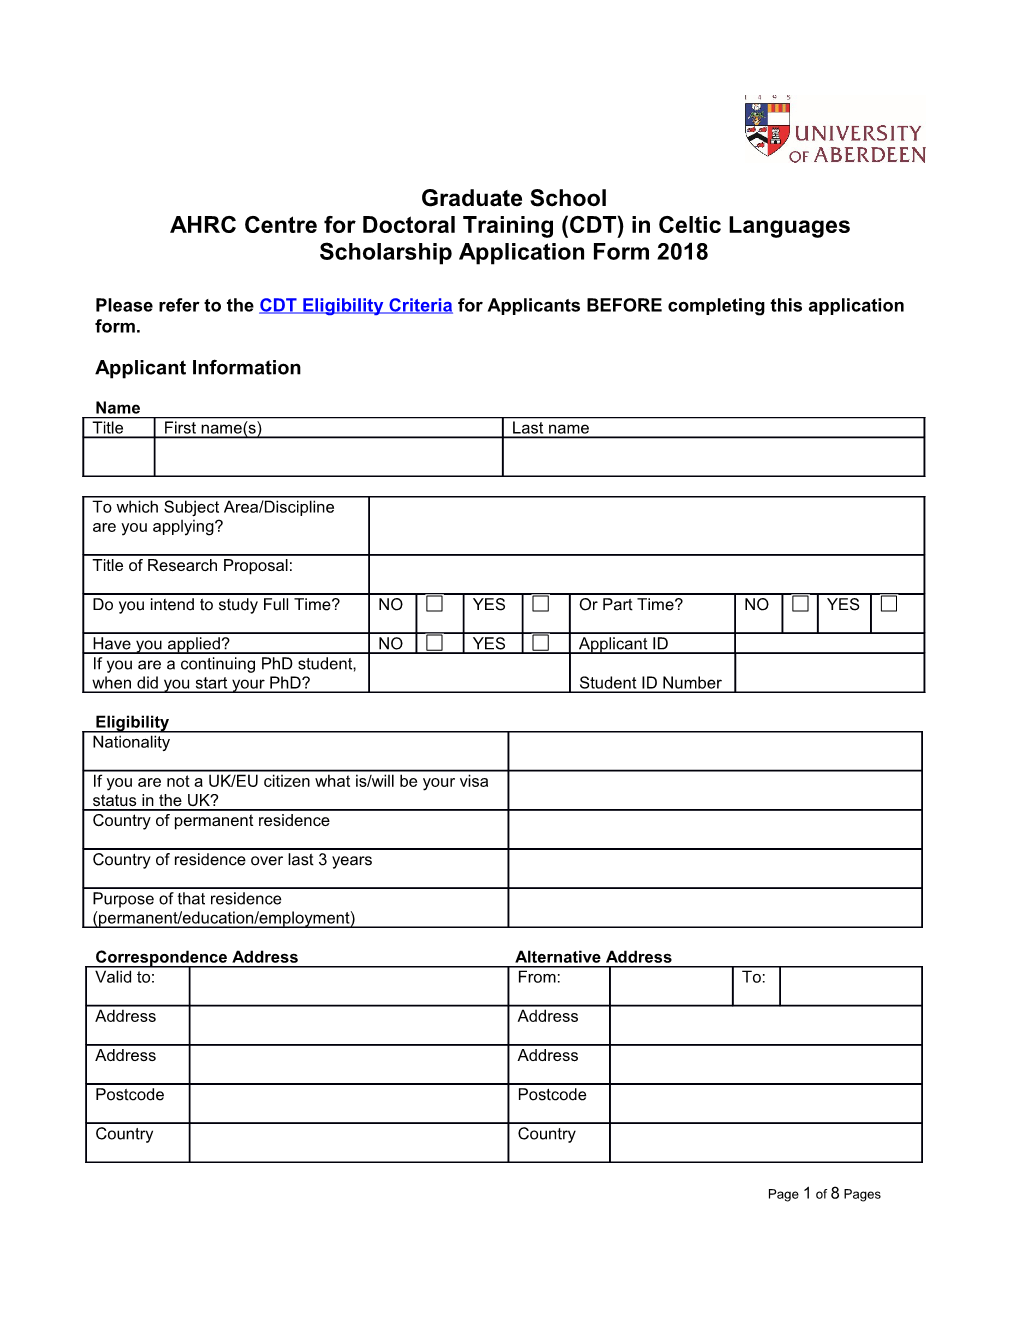 AHRC Application Form 2010